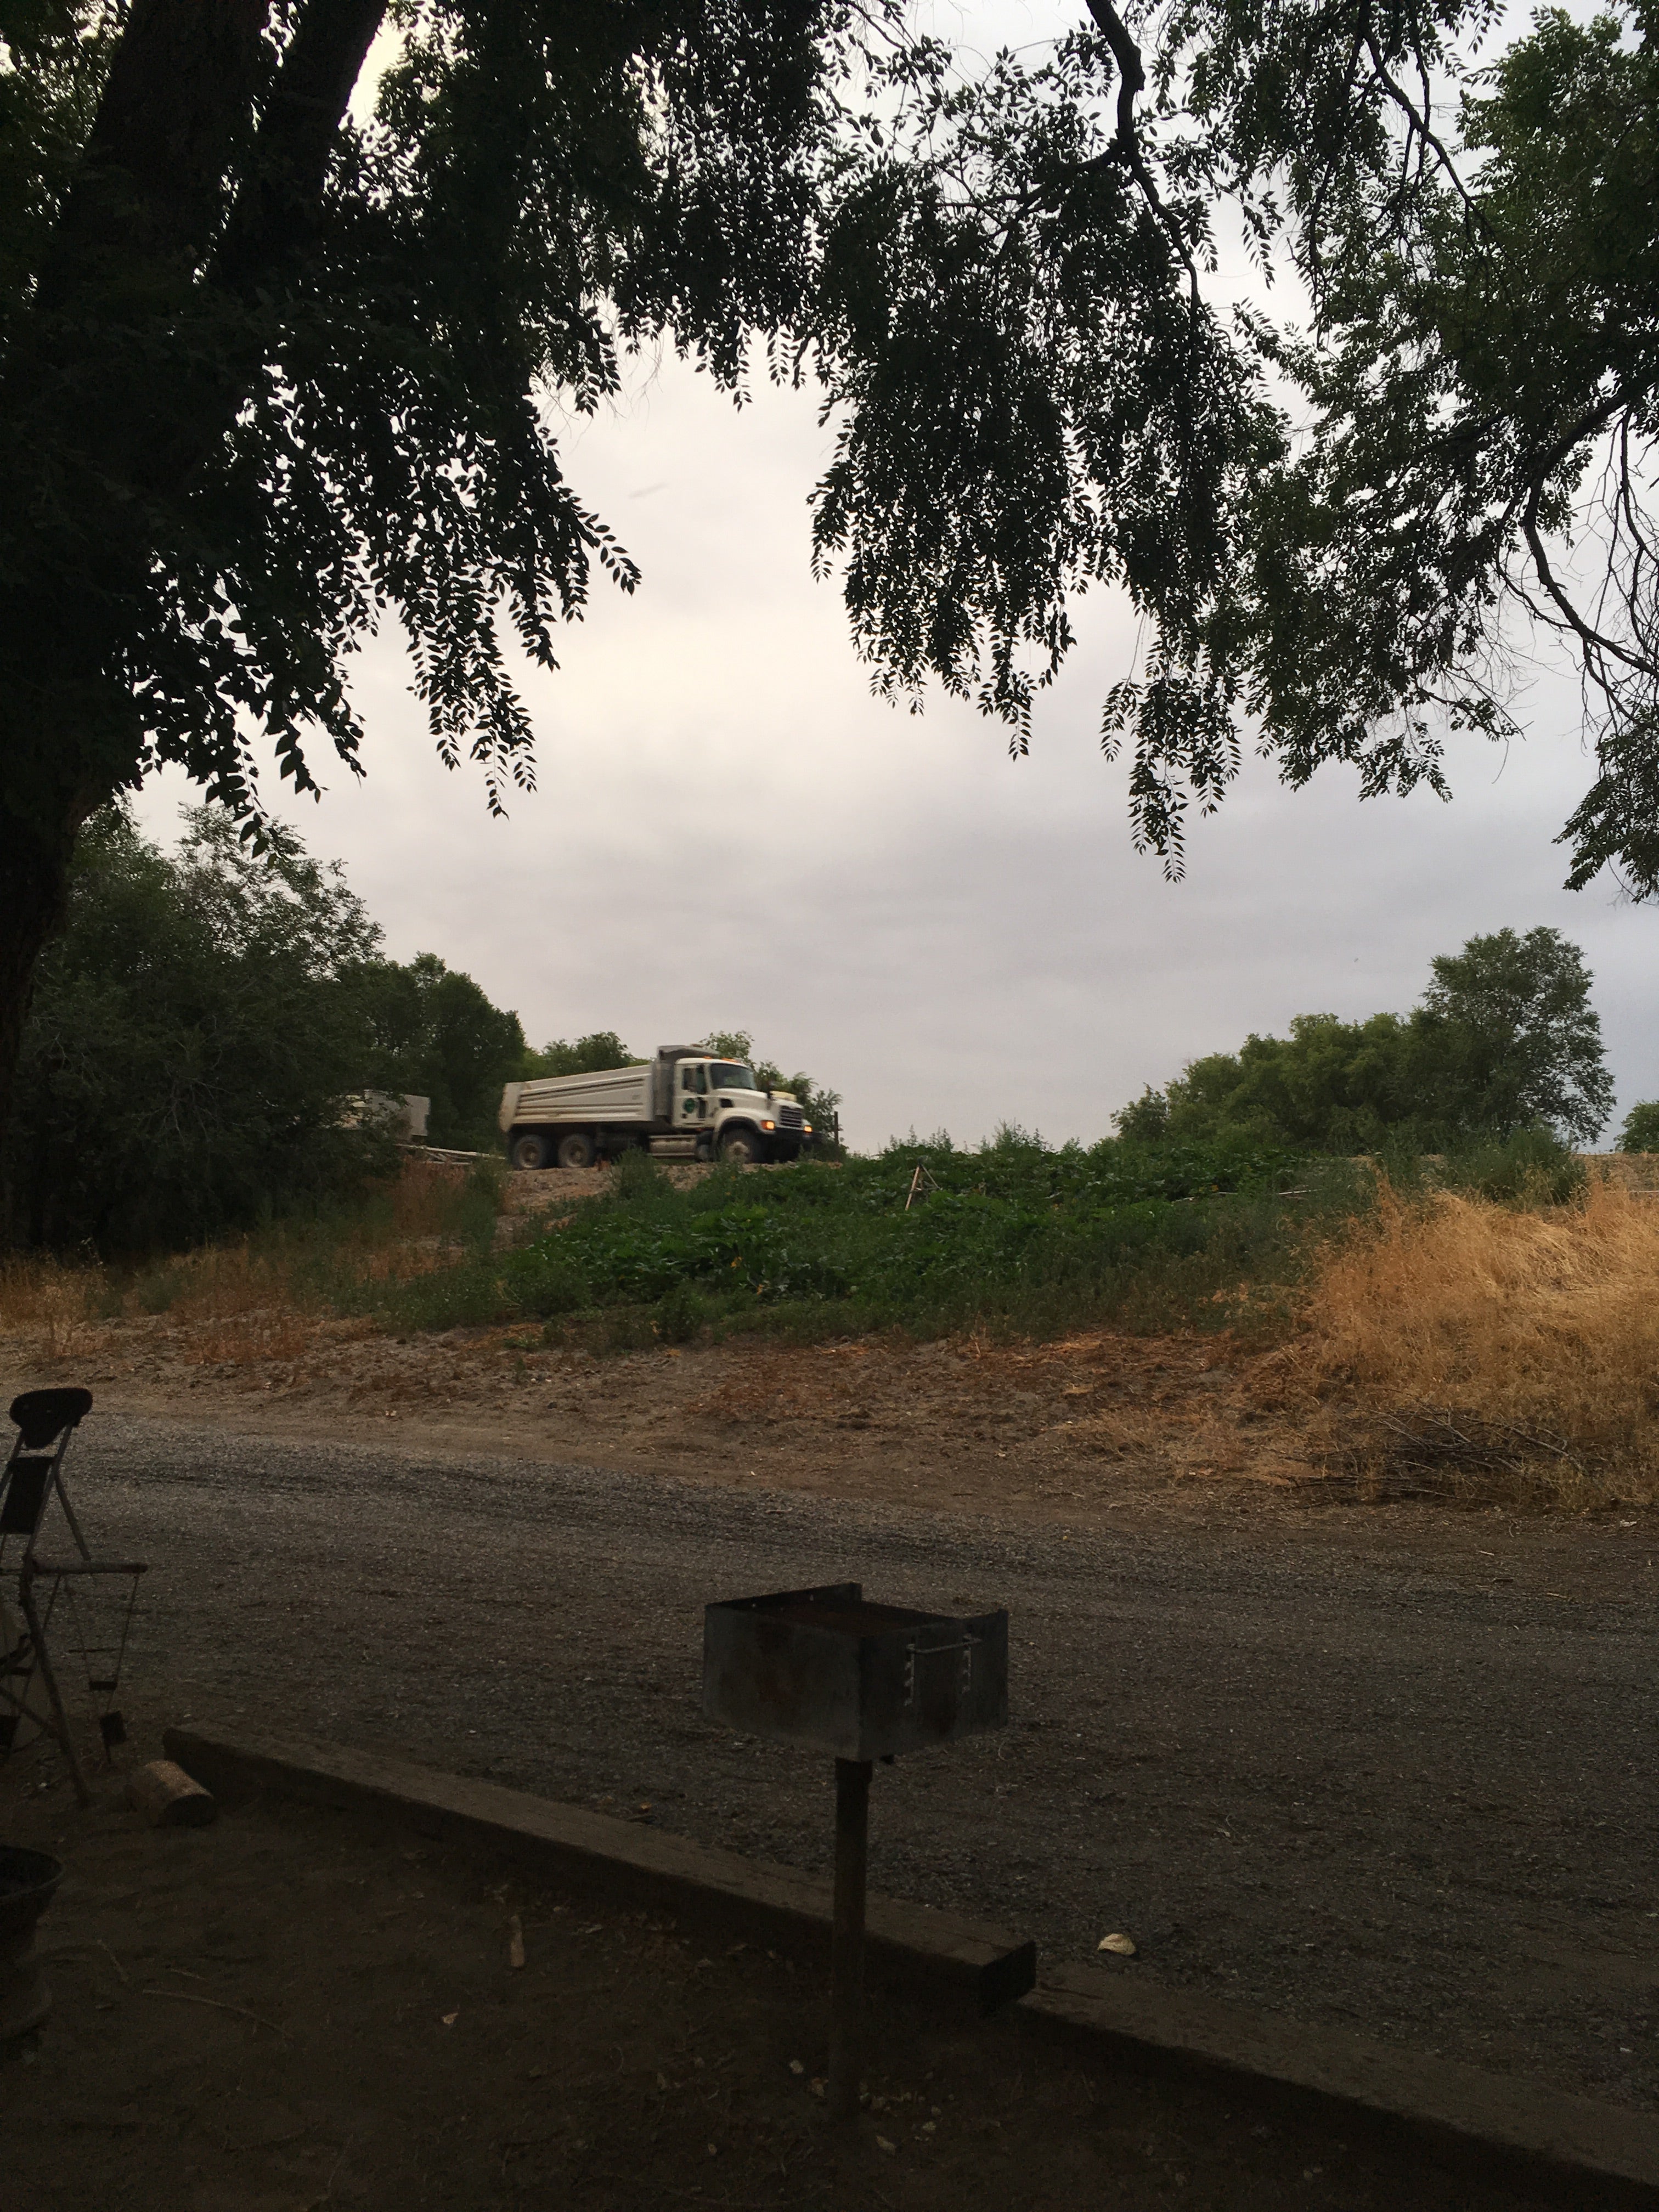 Campsite fire grill + scenic truck in background